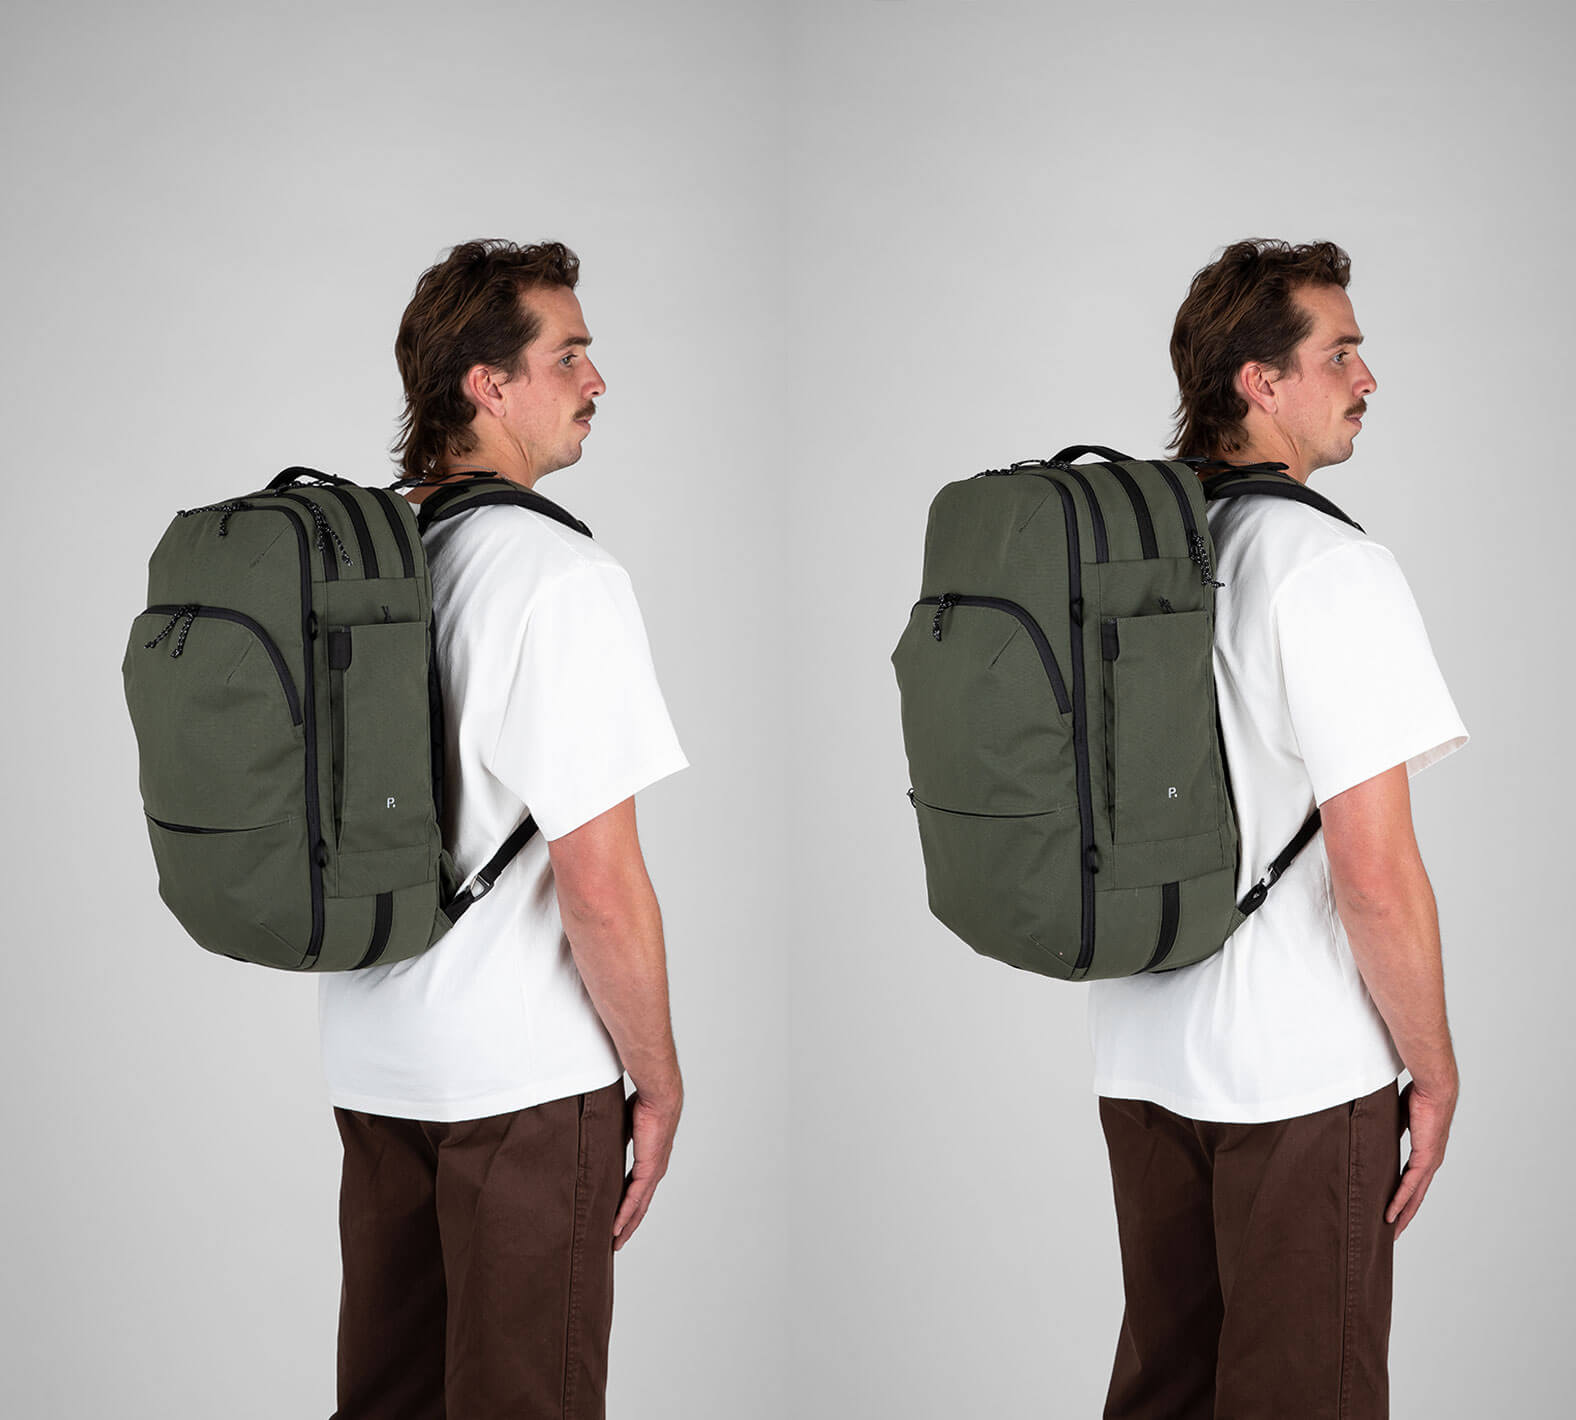 voorjaar broeden verdacht The Pakt Travel Backpack - The Ultimate Carry-on Bag for Travelers | Pakt